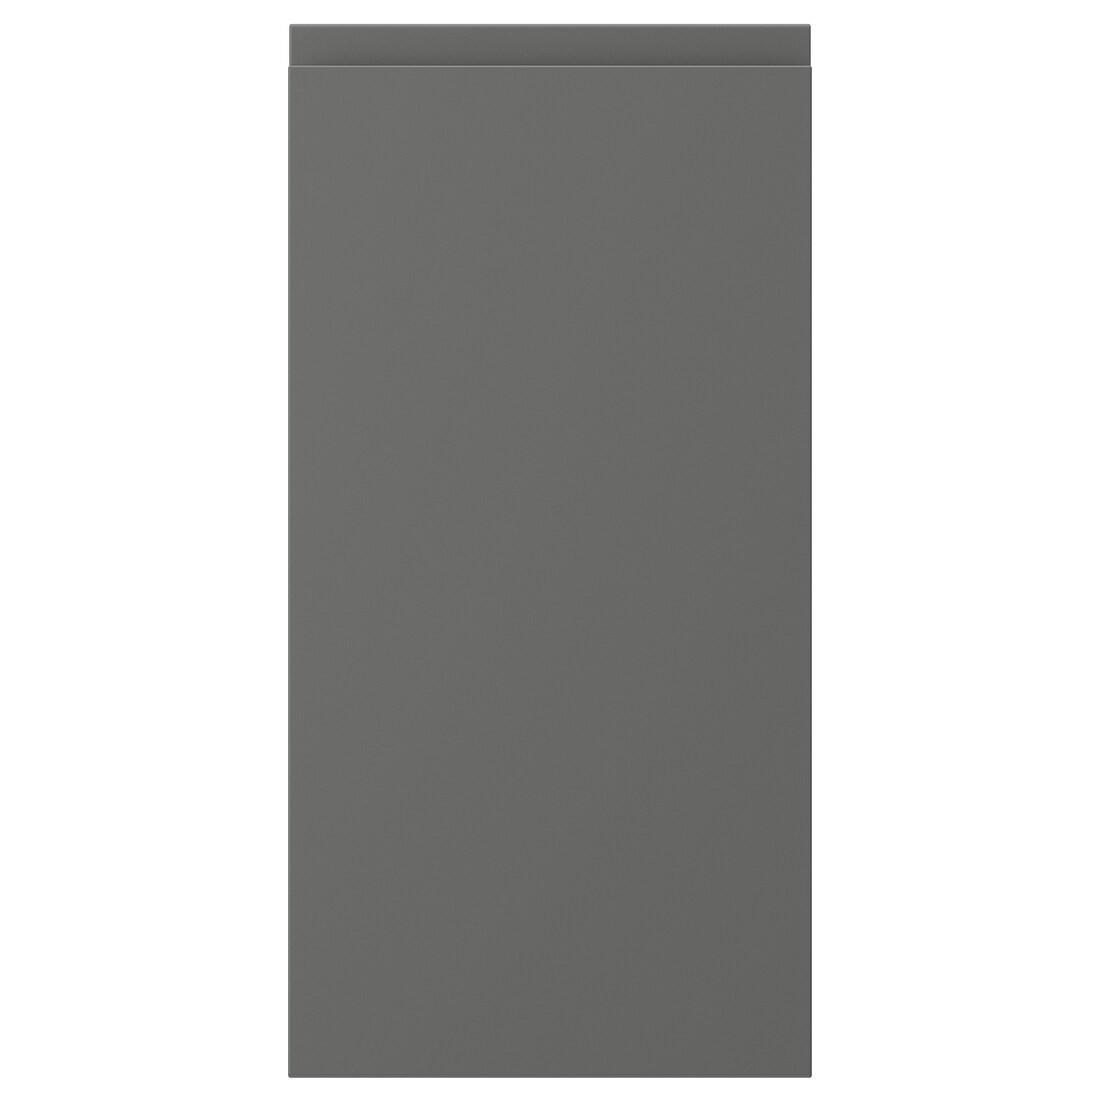 IKEA VOXTORP ВОКСТОРП Дверь, темно-серый, 30x60 см 00454086 004.540.86